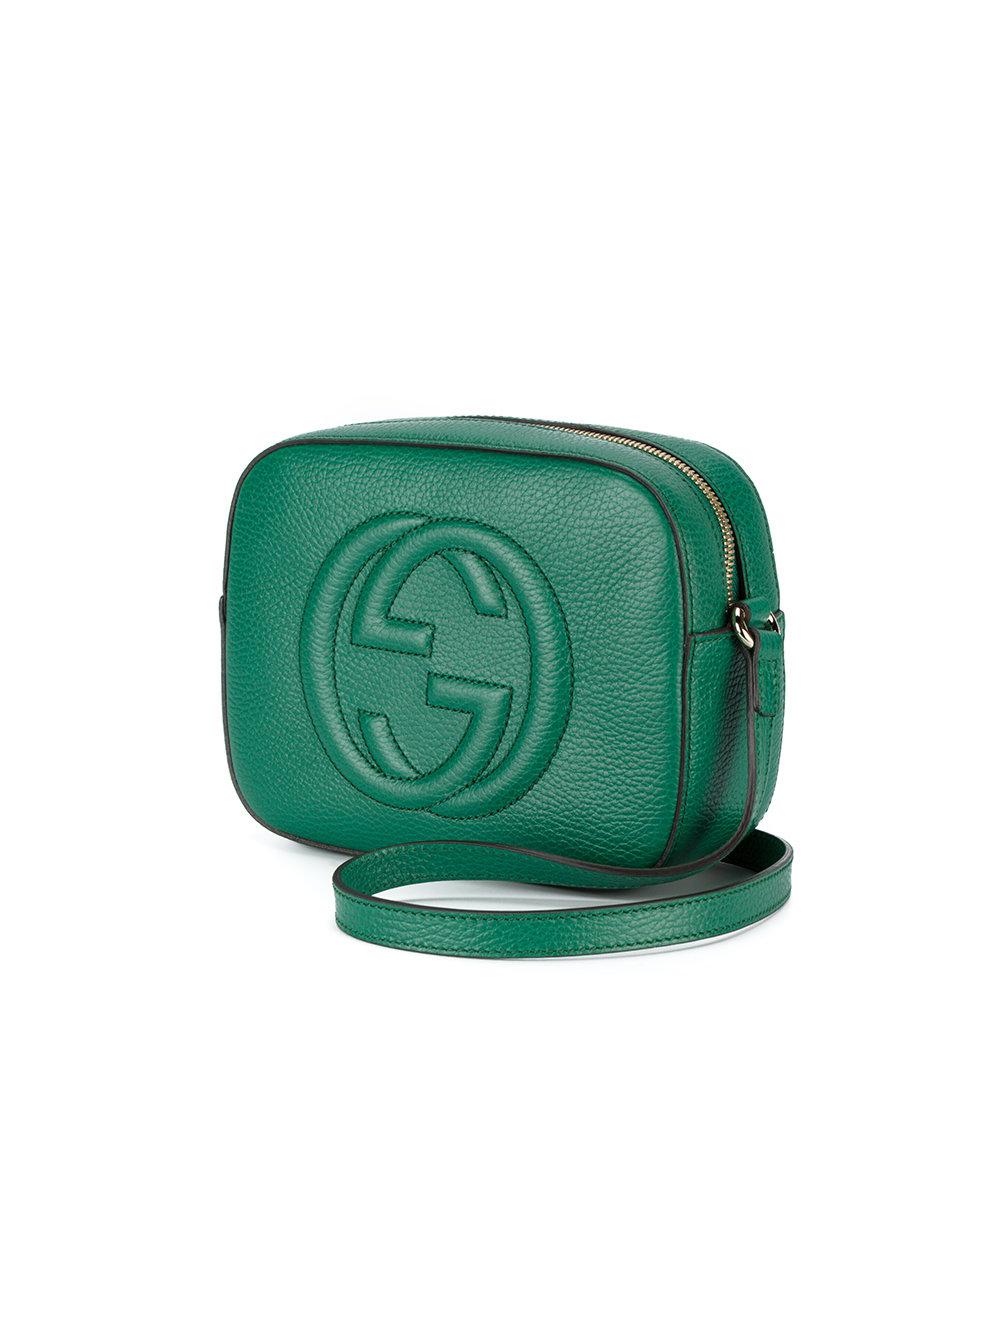 Gucci Leather Gg Soho Crossbody Bag in Green - Lyst